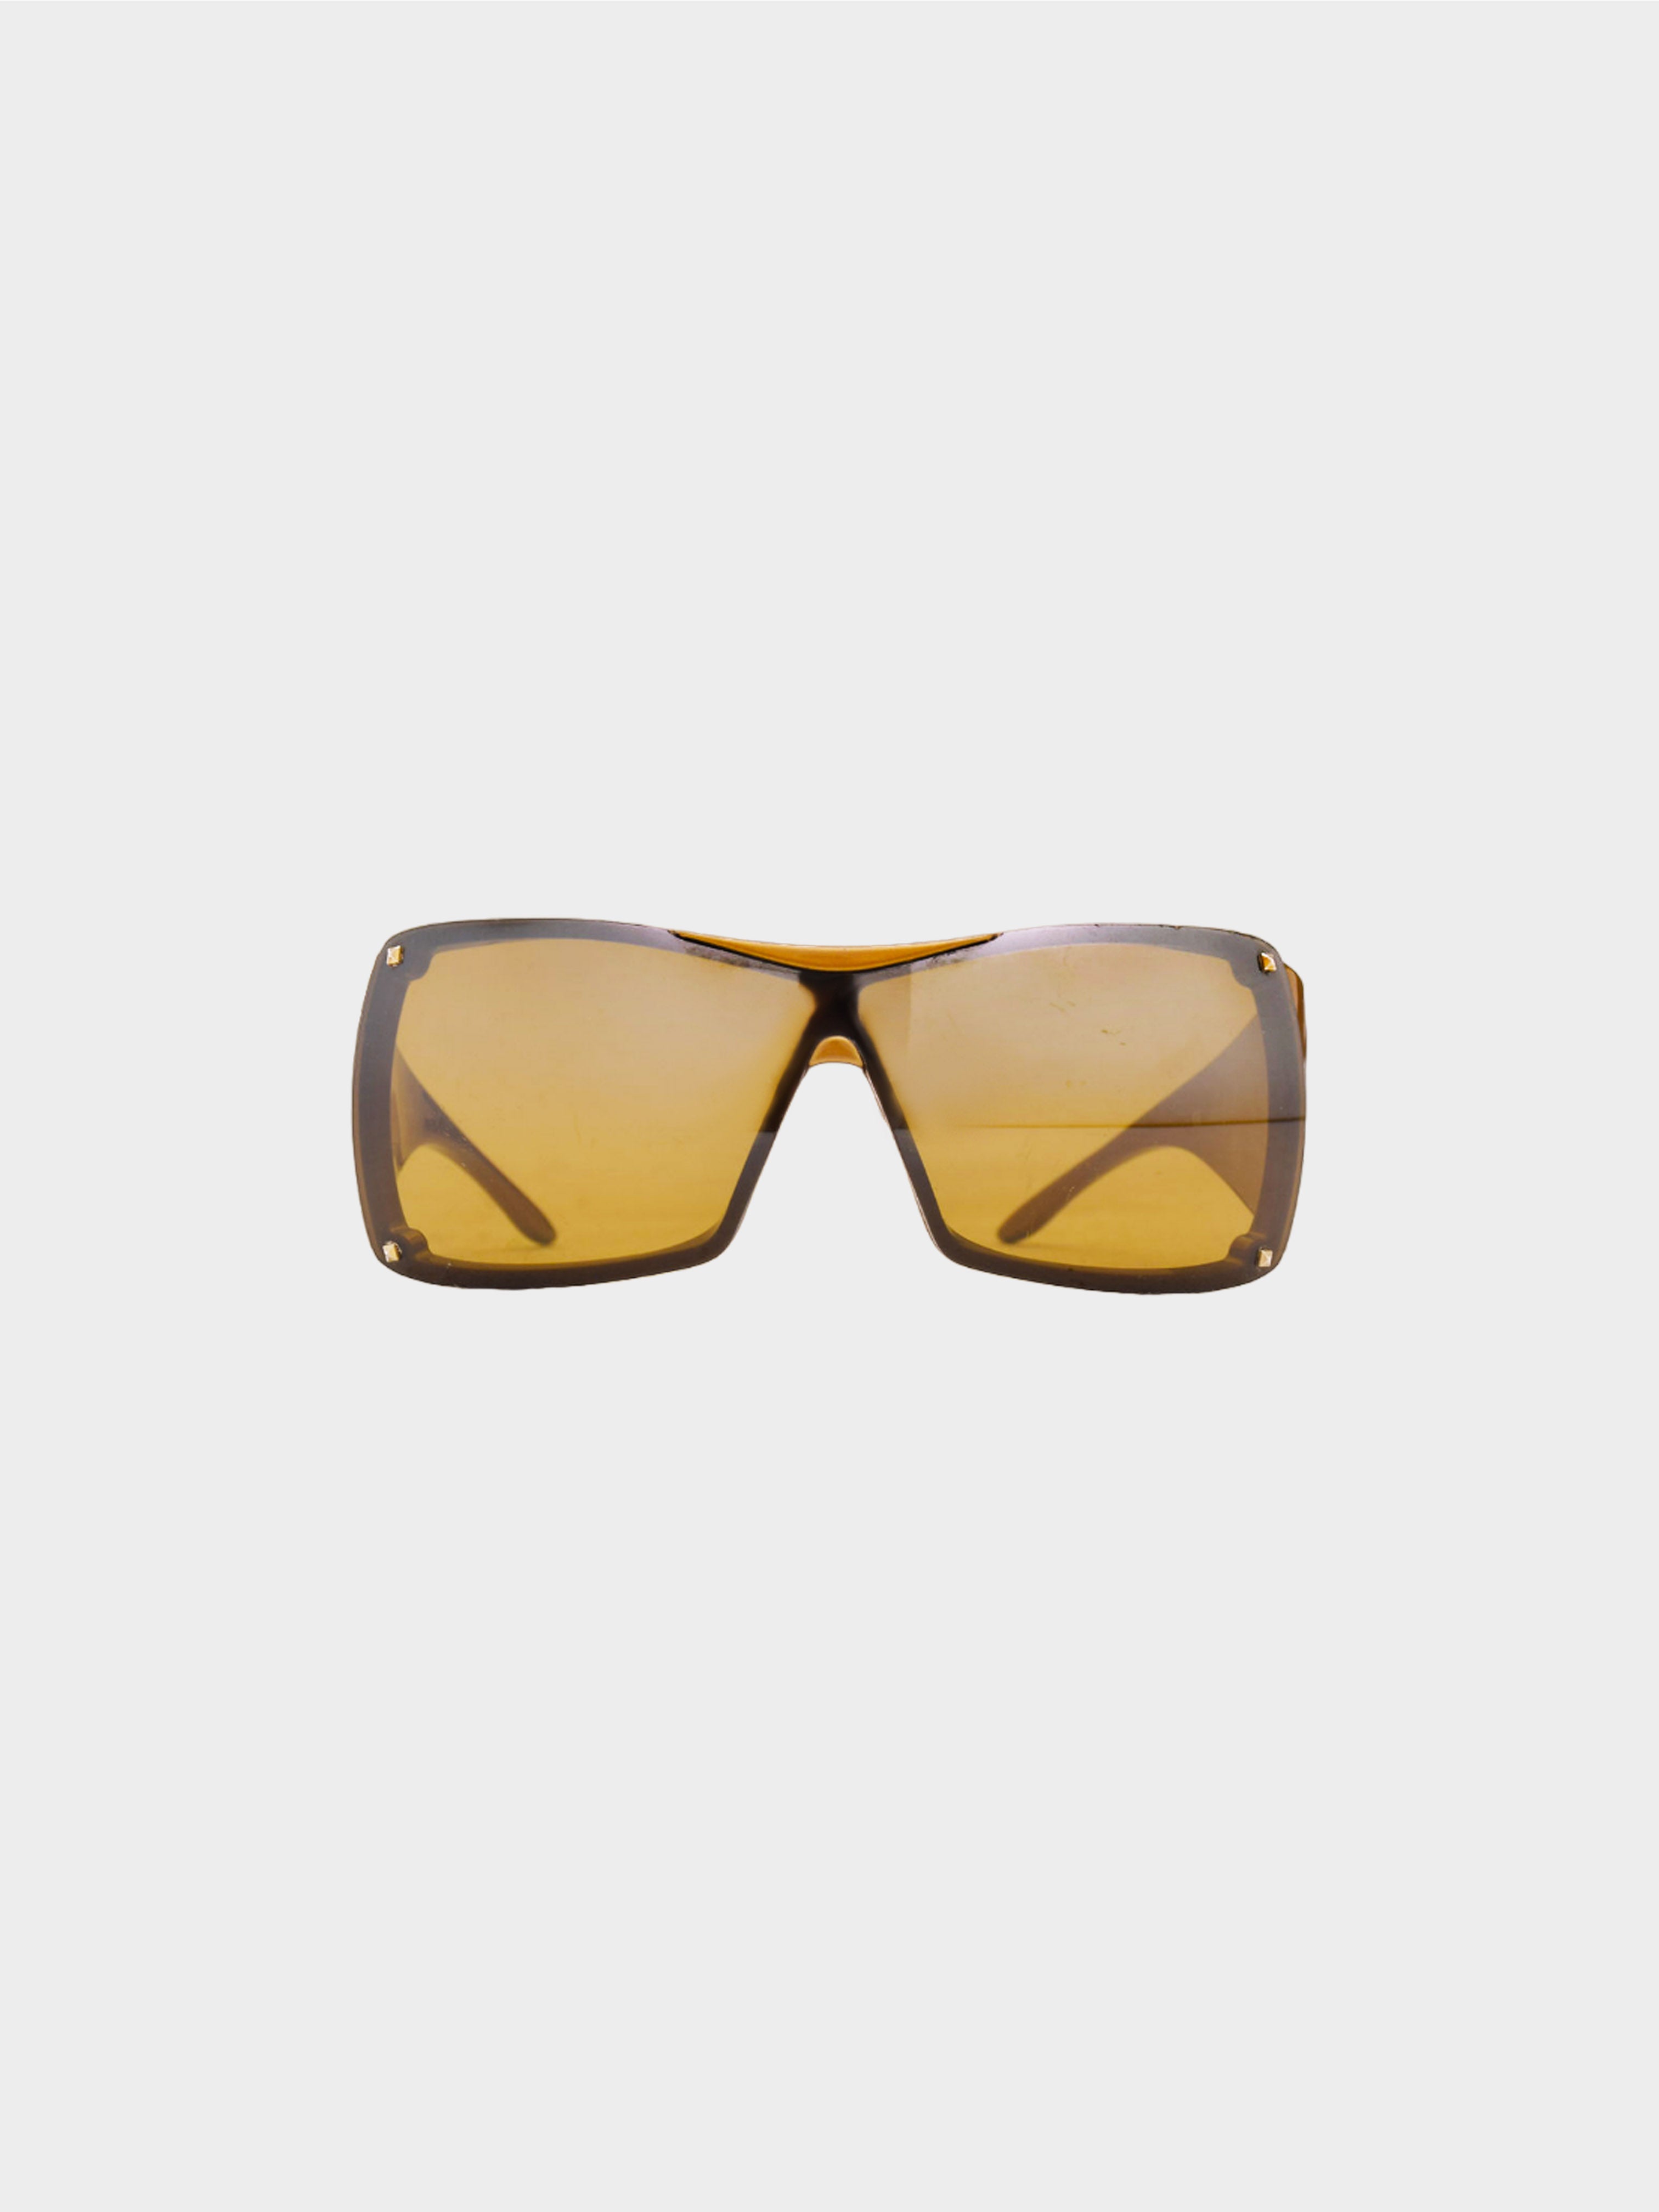 Christian Dior 2000s Gold Overshine 2 Sunglasses